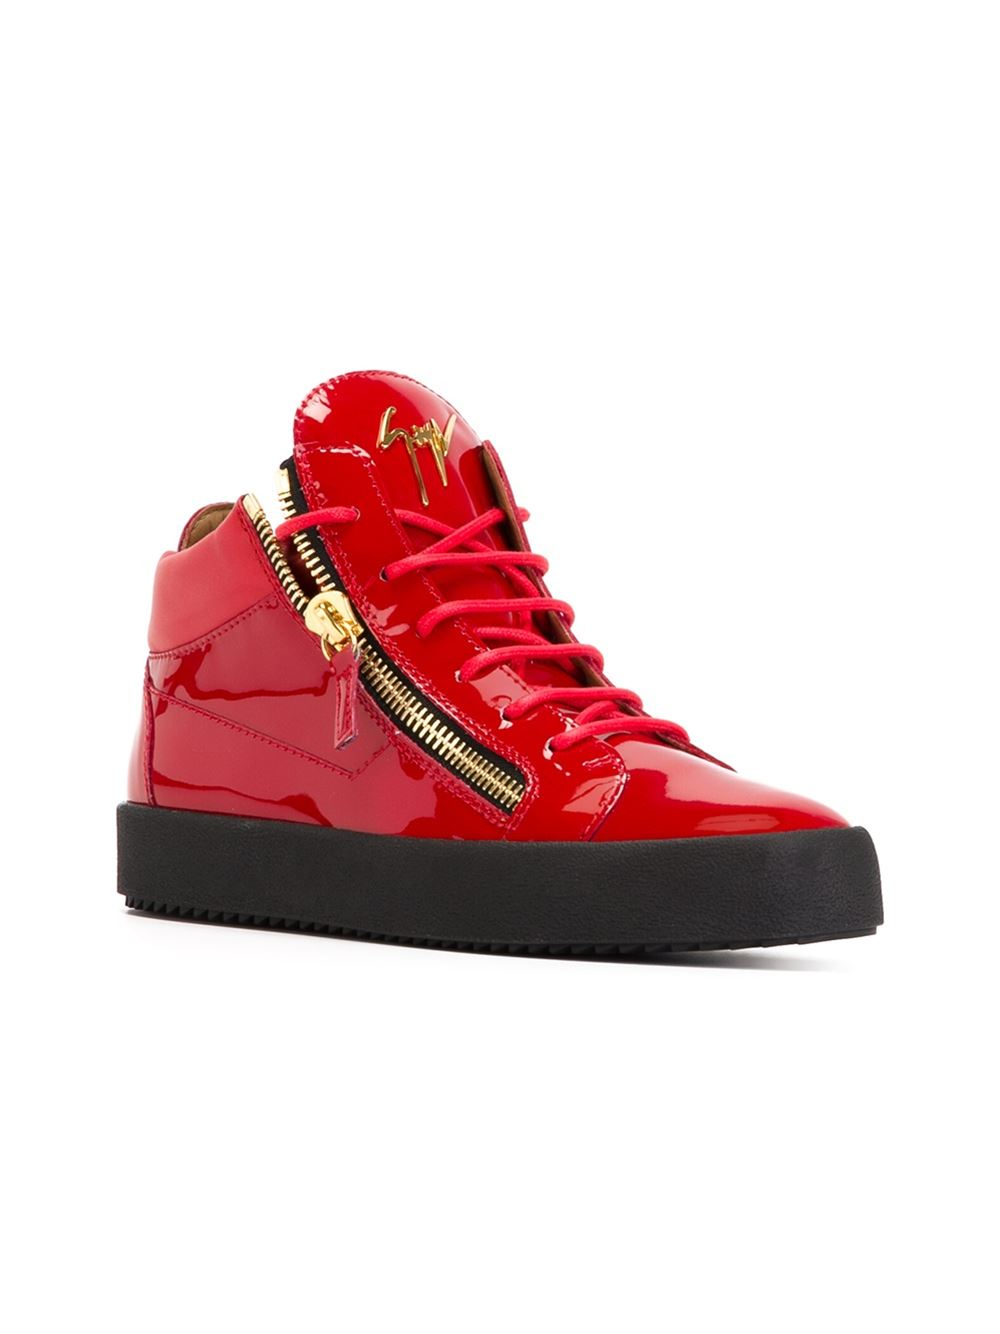 Lyst - Giuseppe zanotti 'vegas' Hi-top Sneakers in Red for Men